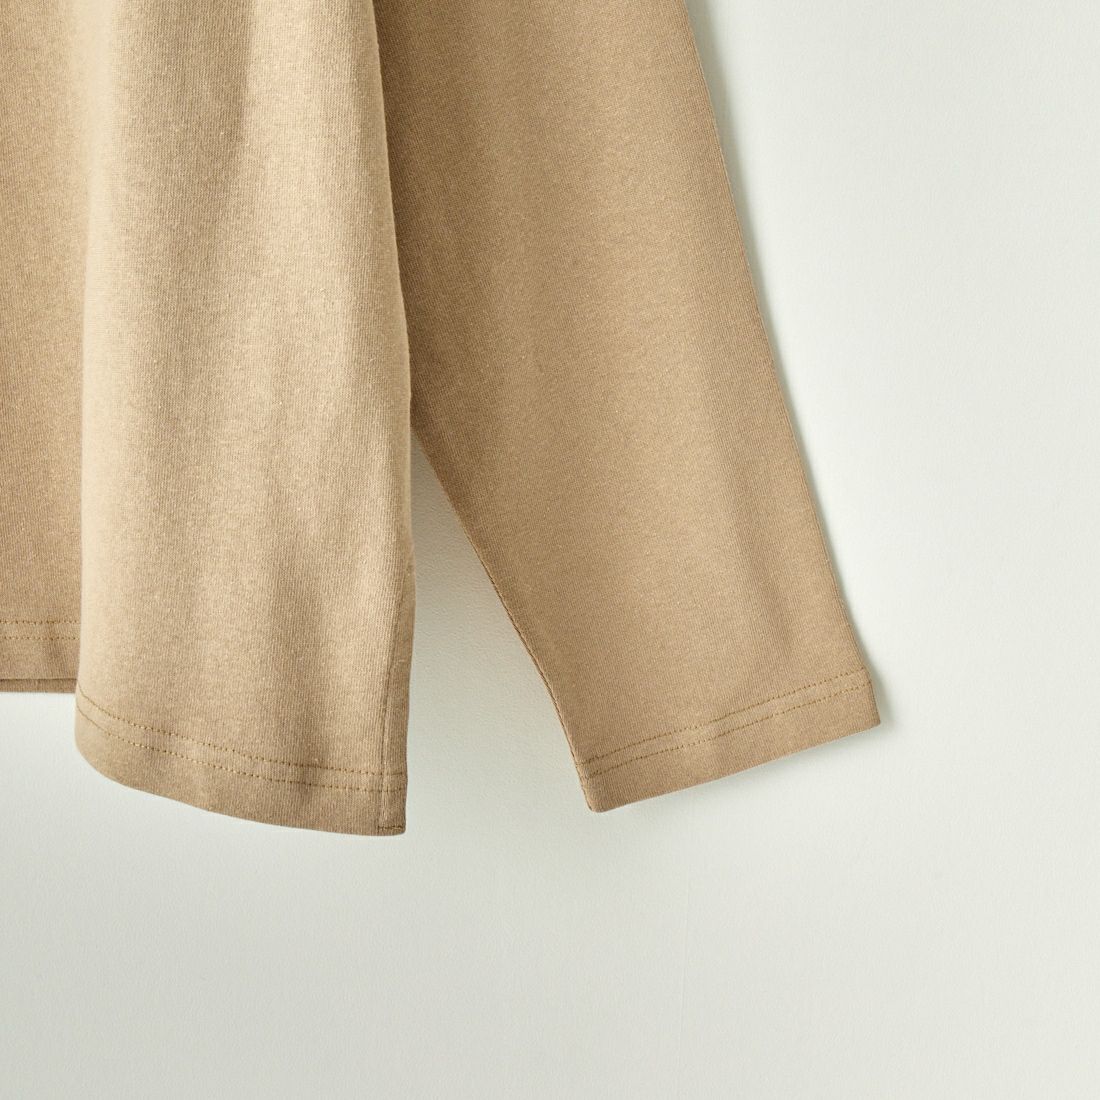 Jeans Factory Clothes [ジーンズファクトリークローズ] ヘビー米綿天竺ビックバスクシャツ [JFC-231-004] KHAKI